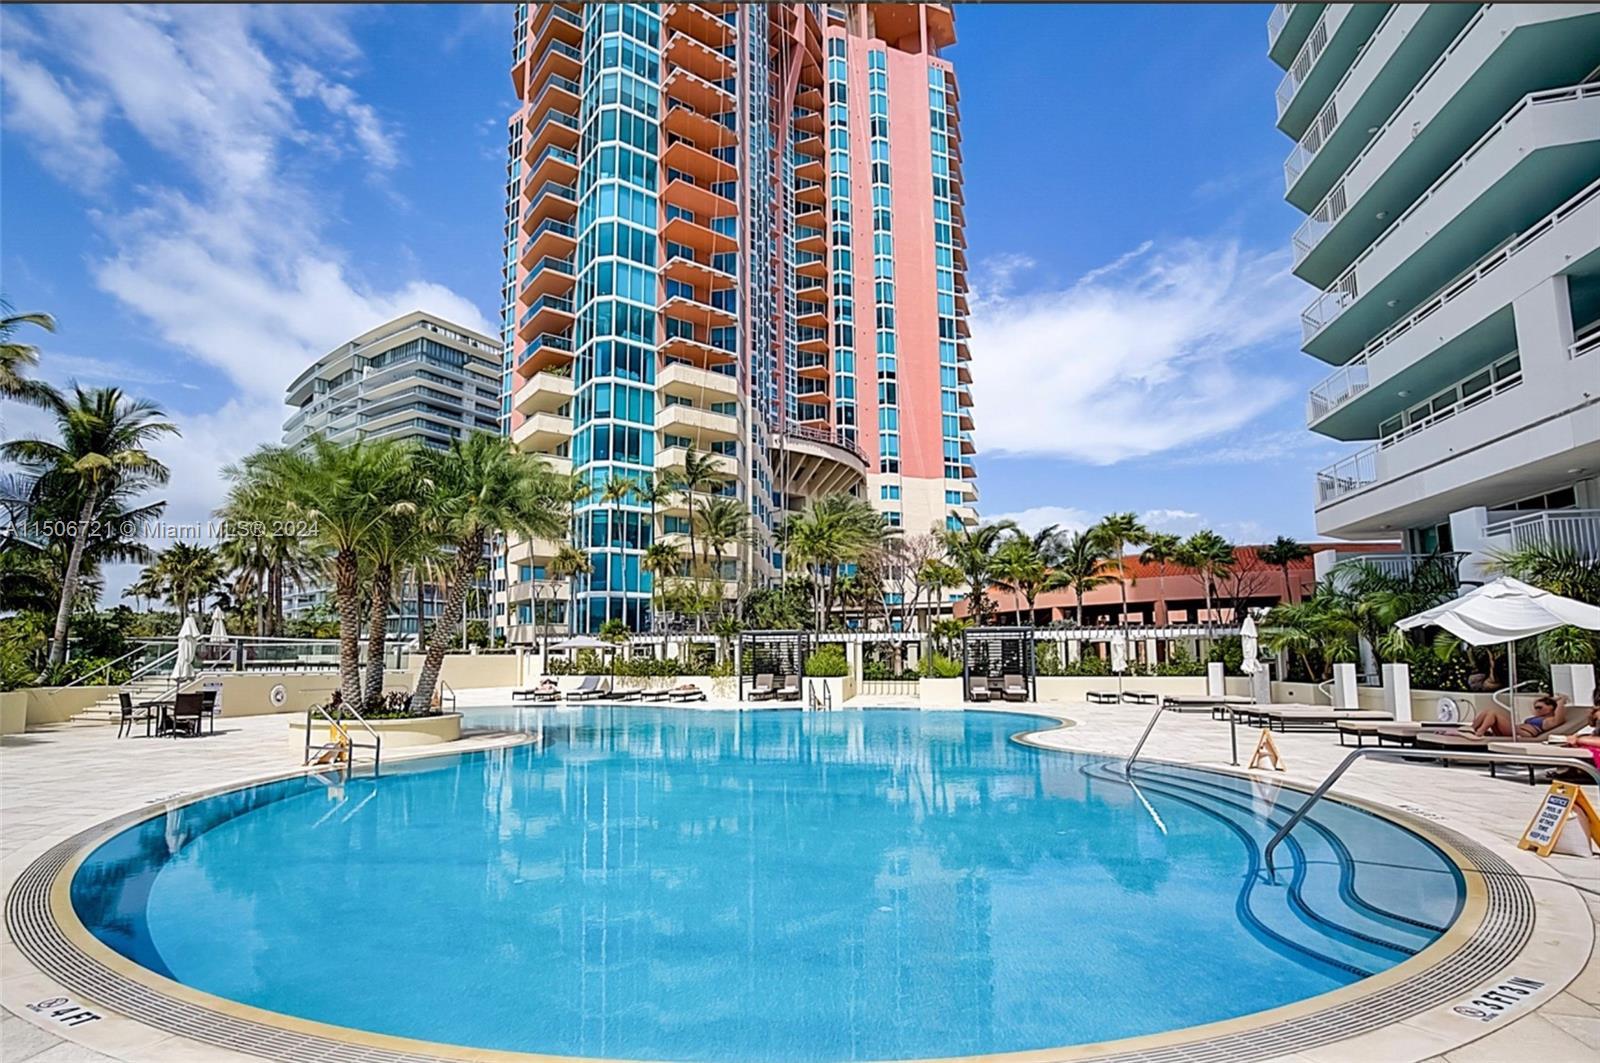 Welcome to Portofino. Located in the most prestigious enclave in Miami Beach's South of Fifth neighb